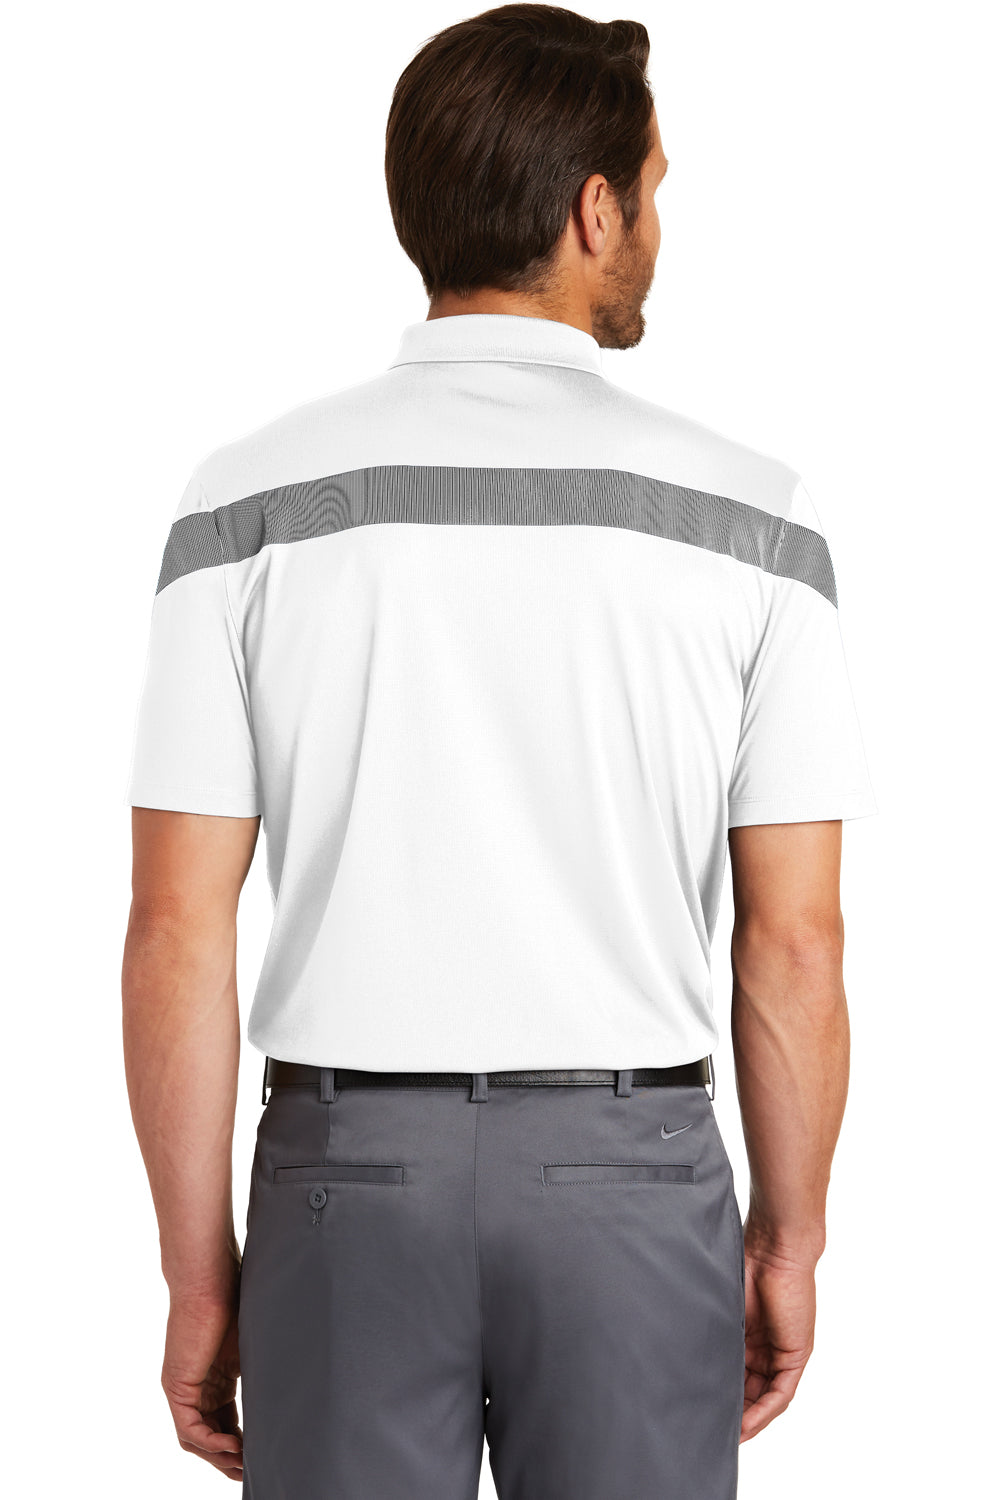 Nike 881657 Mens Commander Dri-Fit Moisture Wicking Short Sleeve Polo Shirt White/Black Back